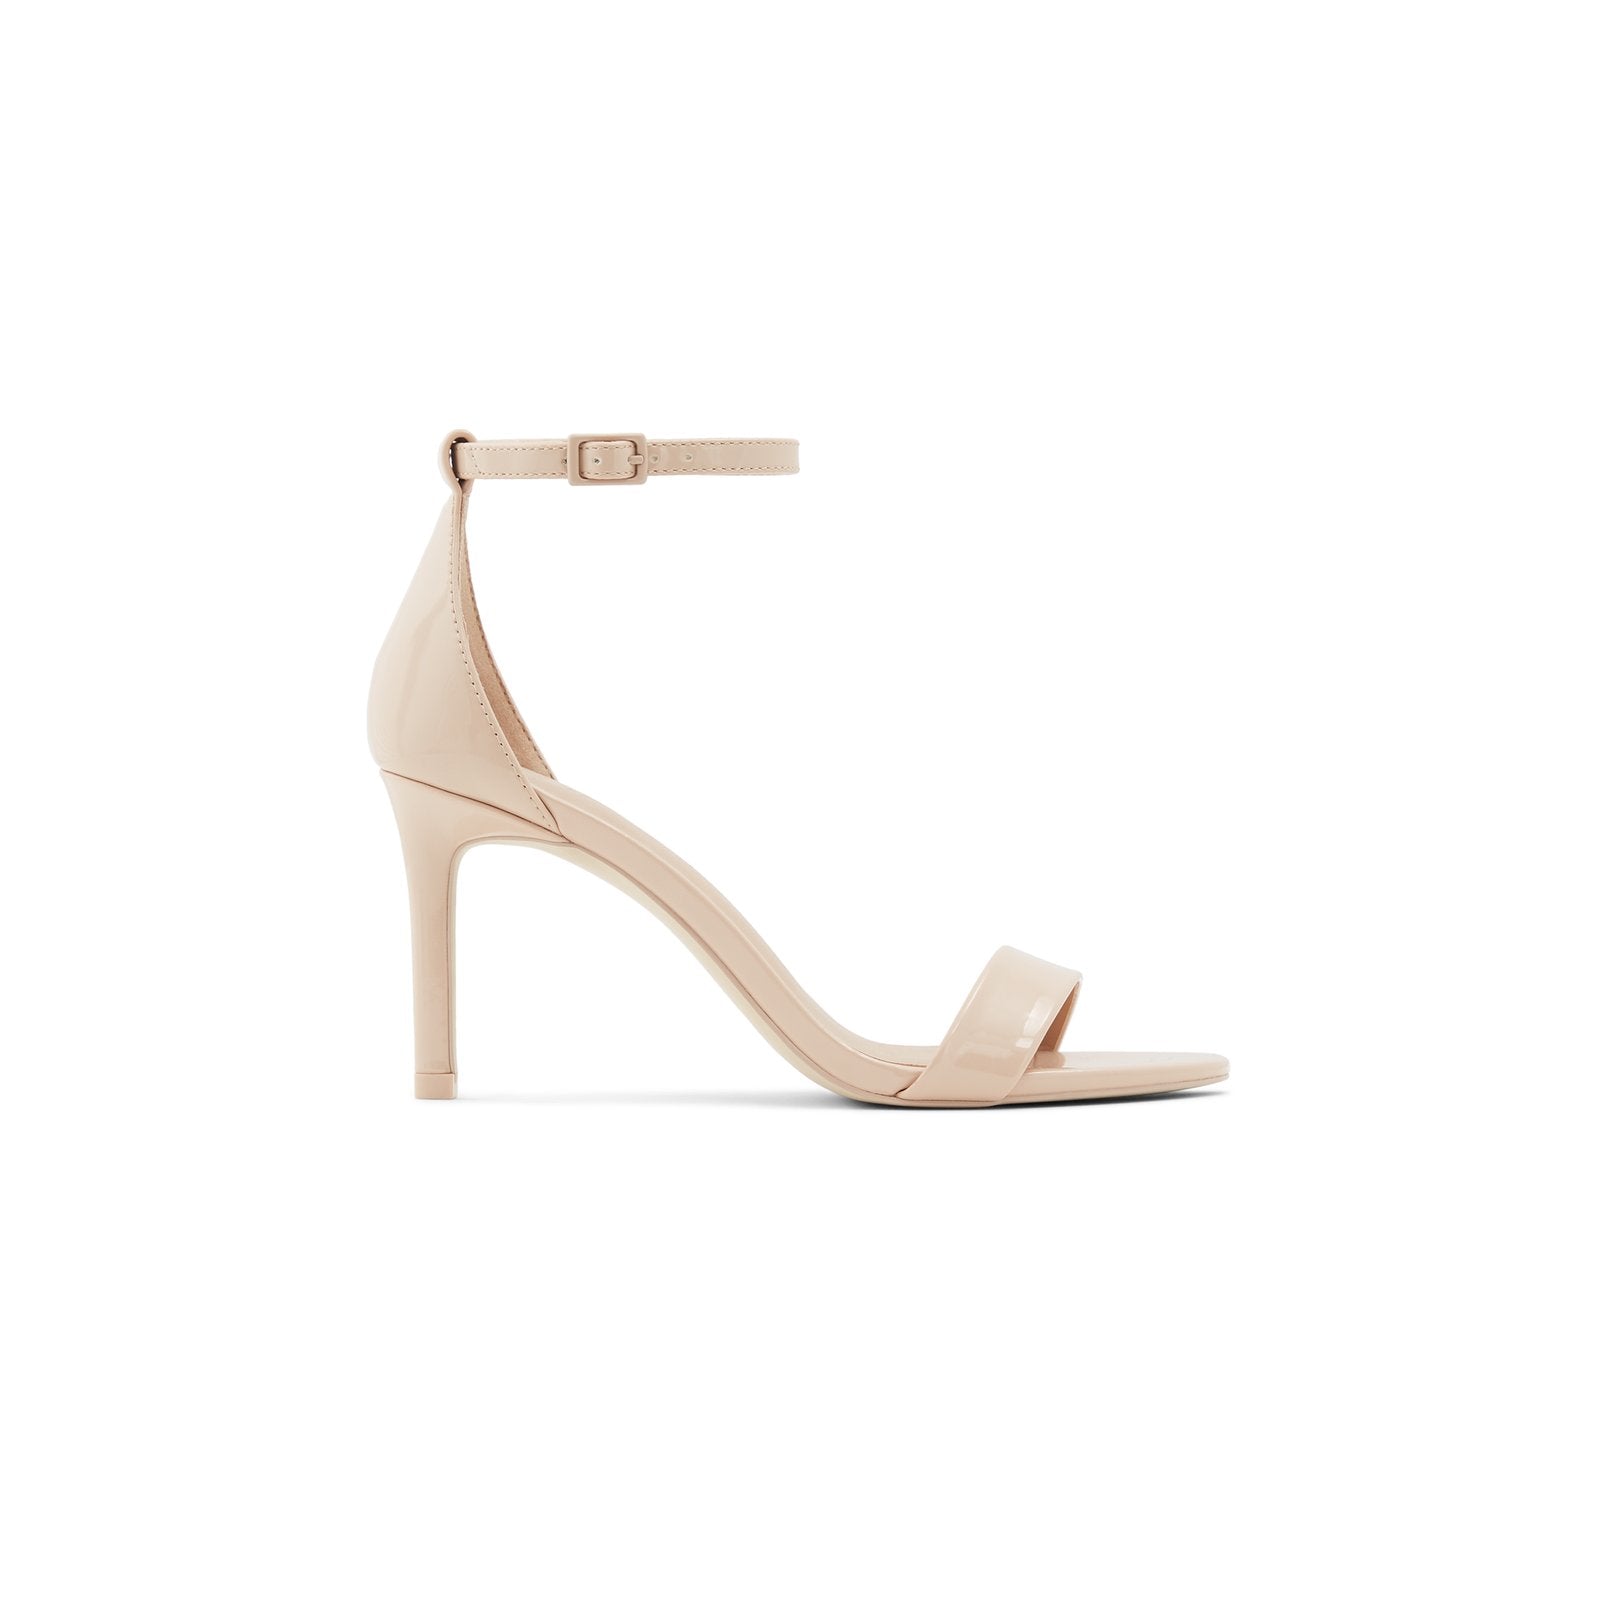 Ella / Heeled Sandals Women Shoes - BONE - CALL IT SPRING KSA